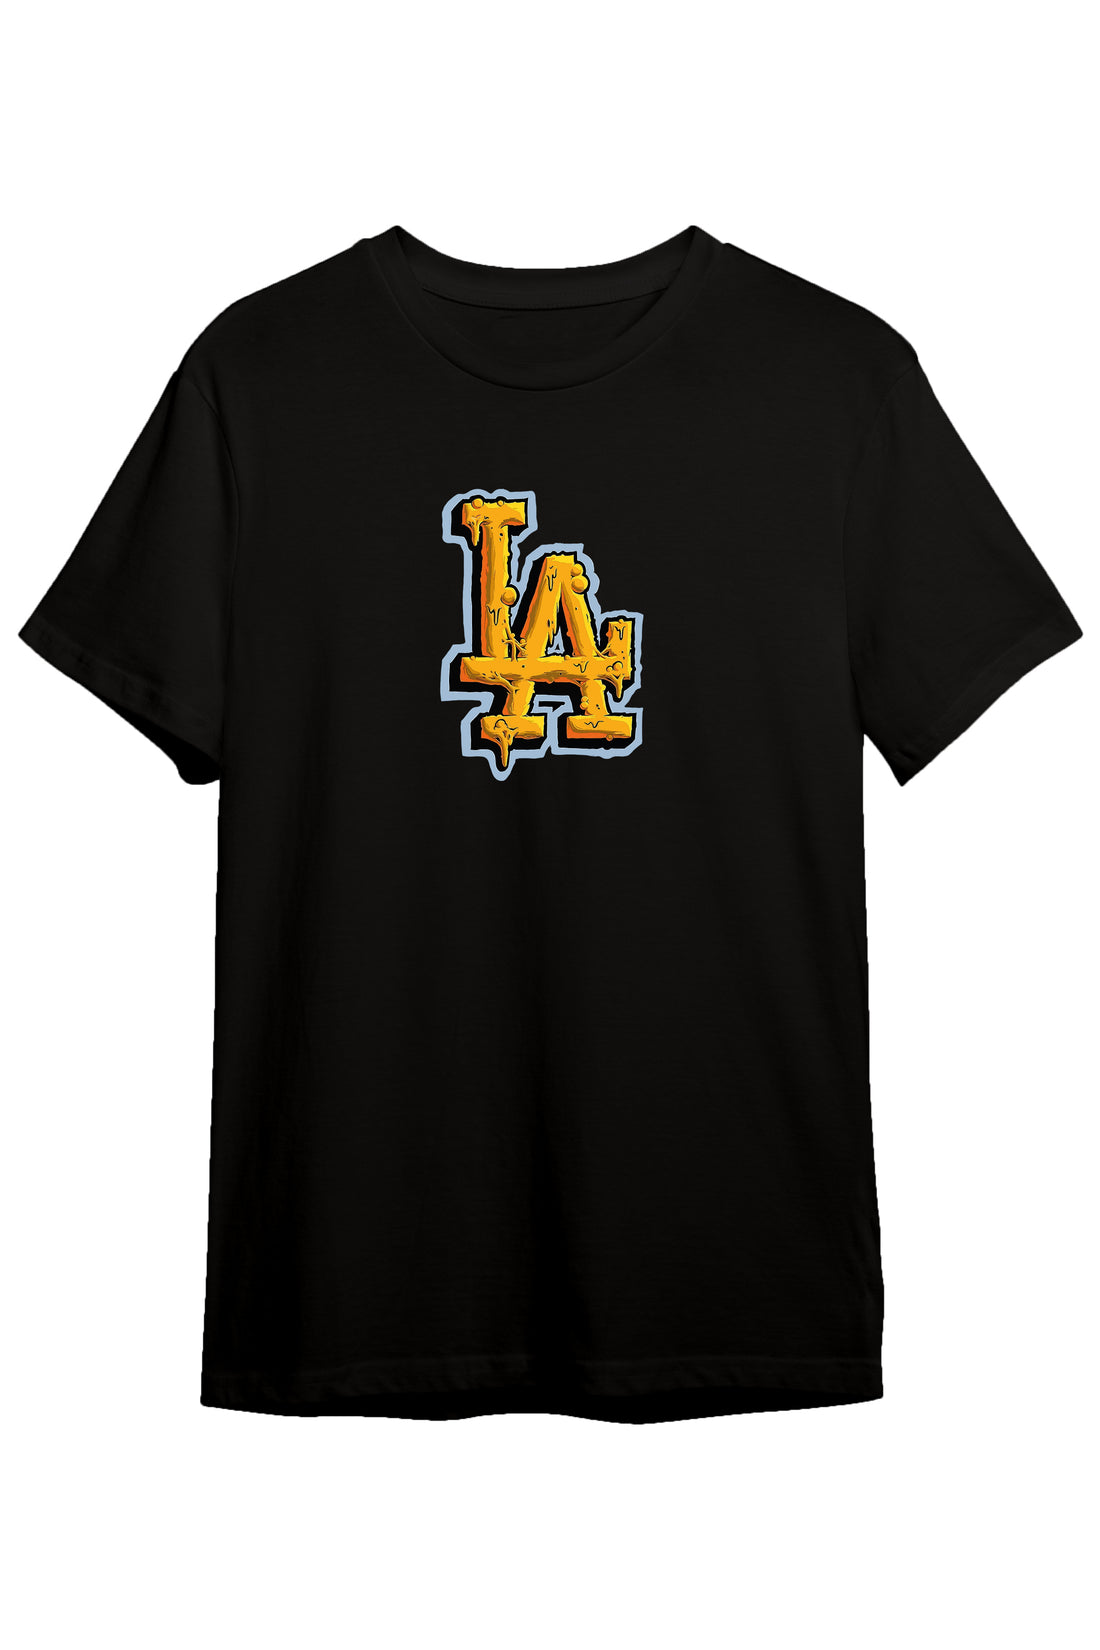 Los Angeles - Regular Tshirt